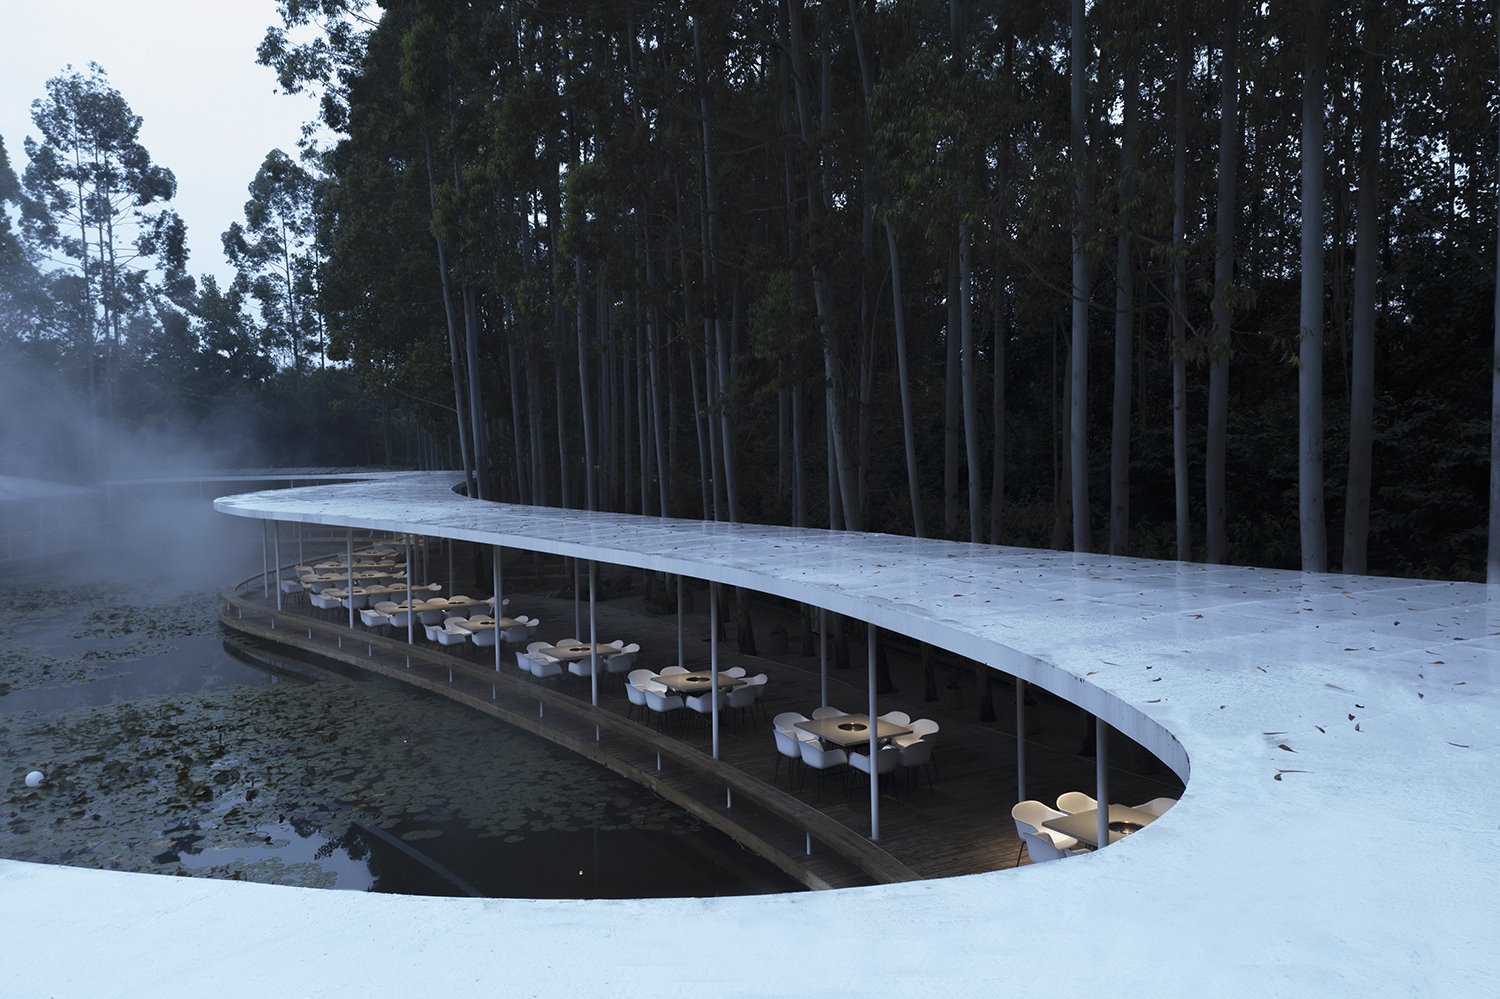 restaurante Garden Hotpot de MUDA-Architects en Chengdu China